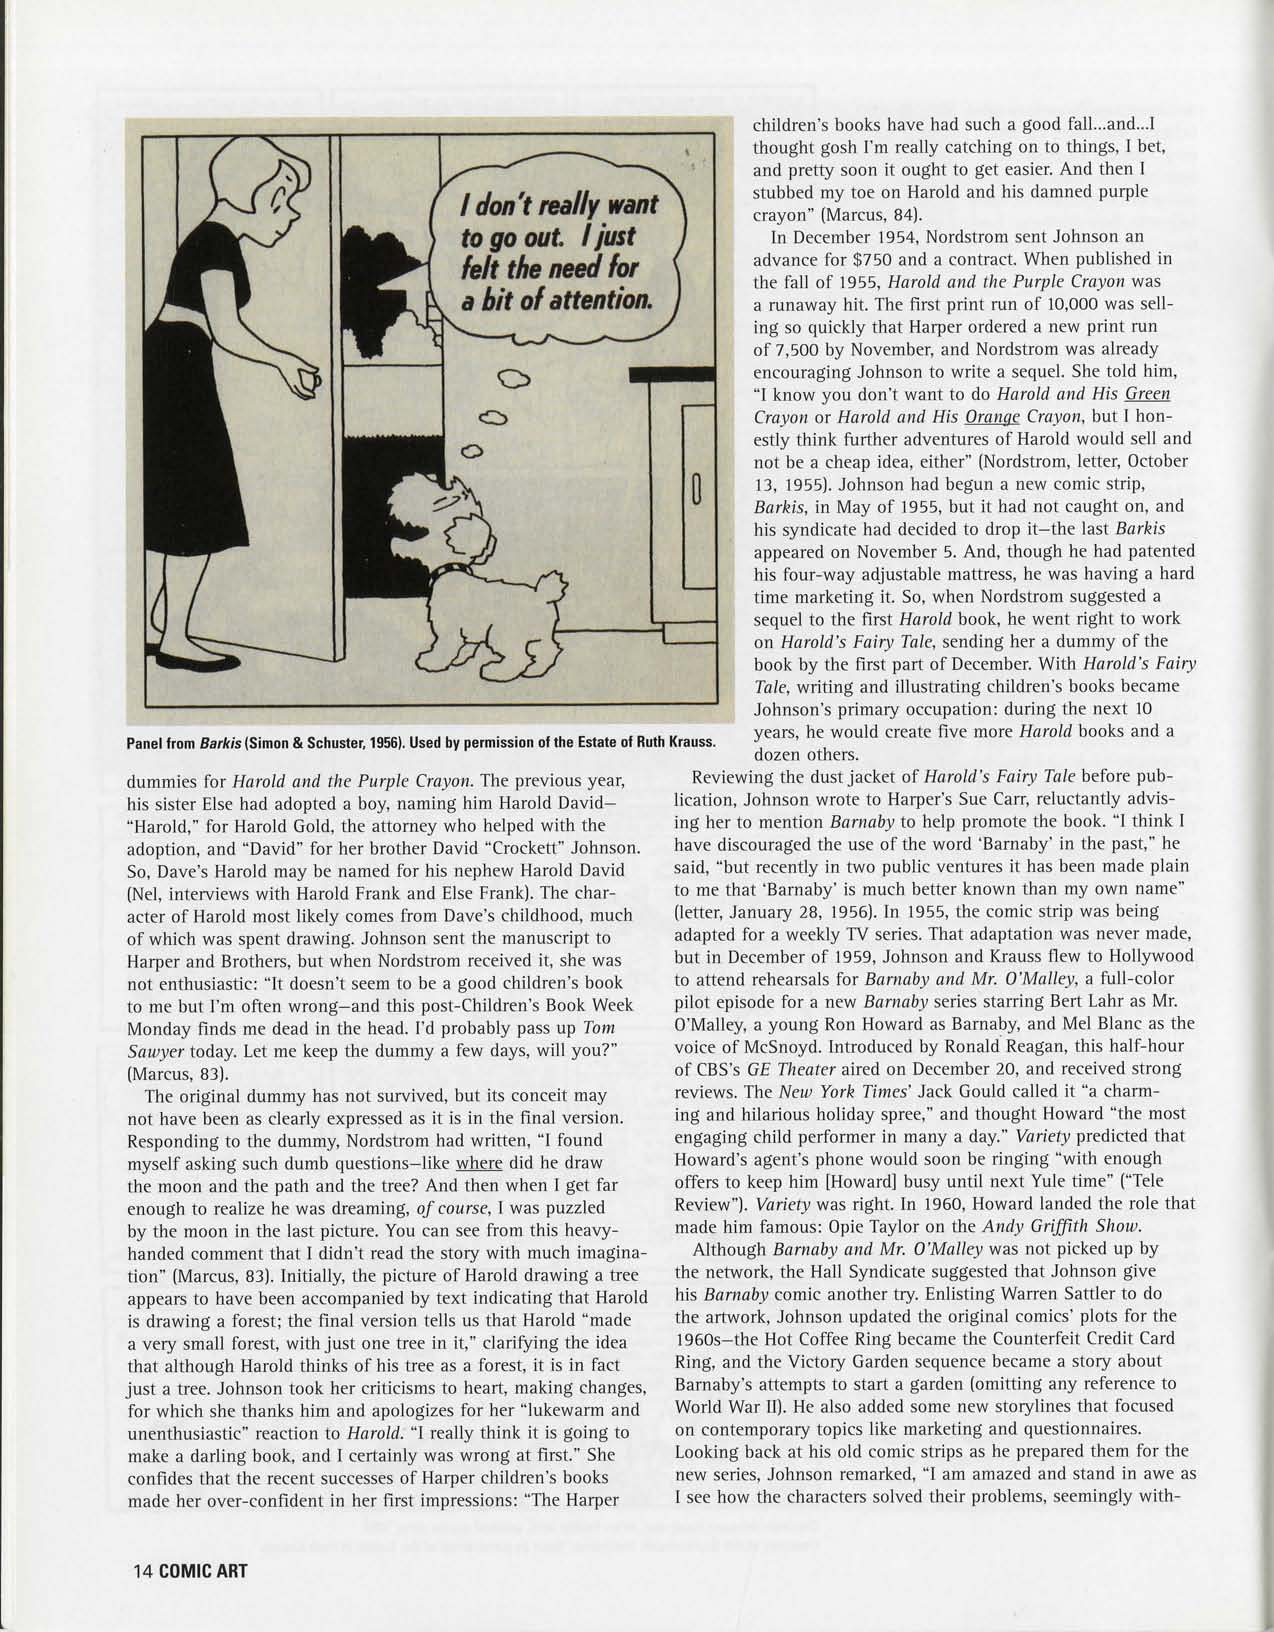 Philip Nel, "Crockett Johnson and the Purple Crayon: A Life in Art," Comic Art 5 (Winter 2004), p. 14